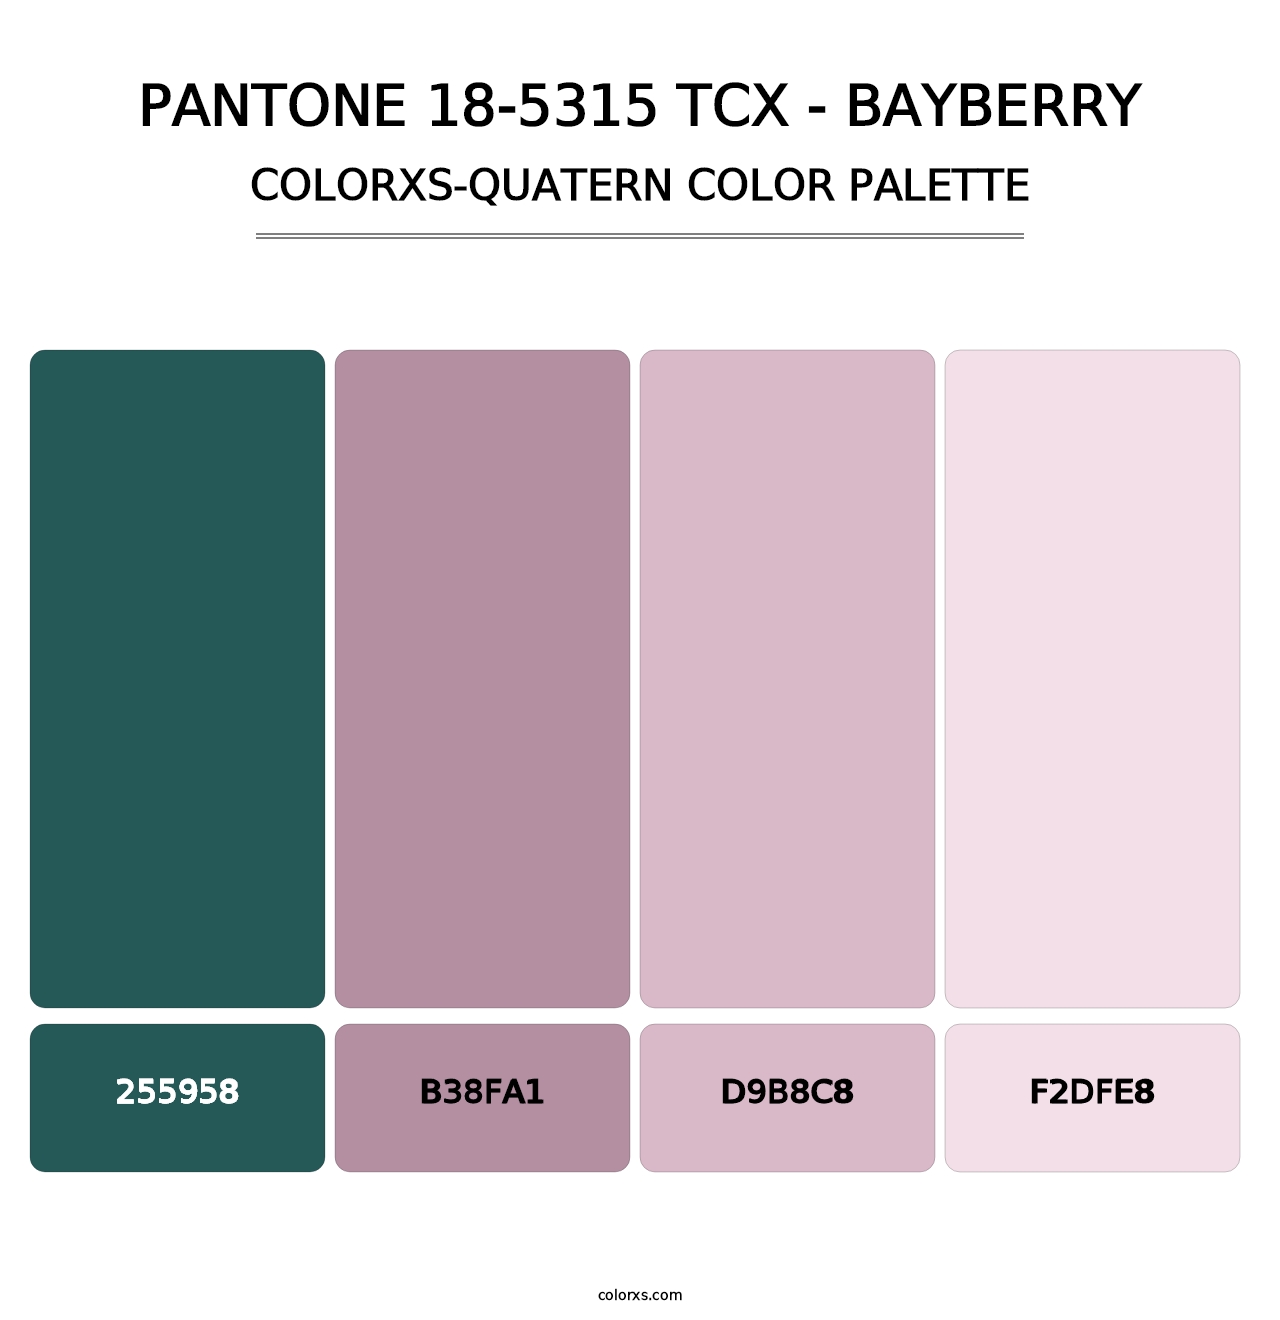 PANTONE 18-5315 TCX - Bayberry - Colorxs Quatern Palette